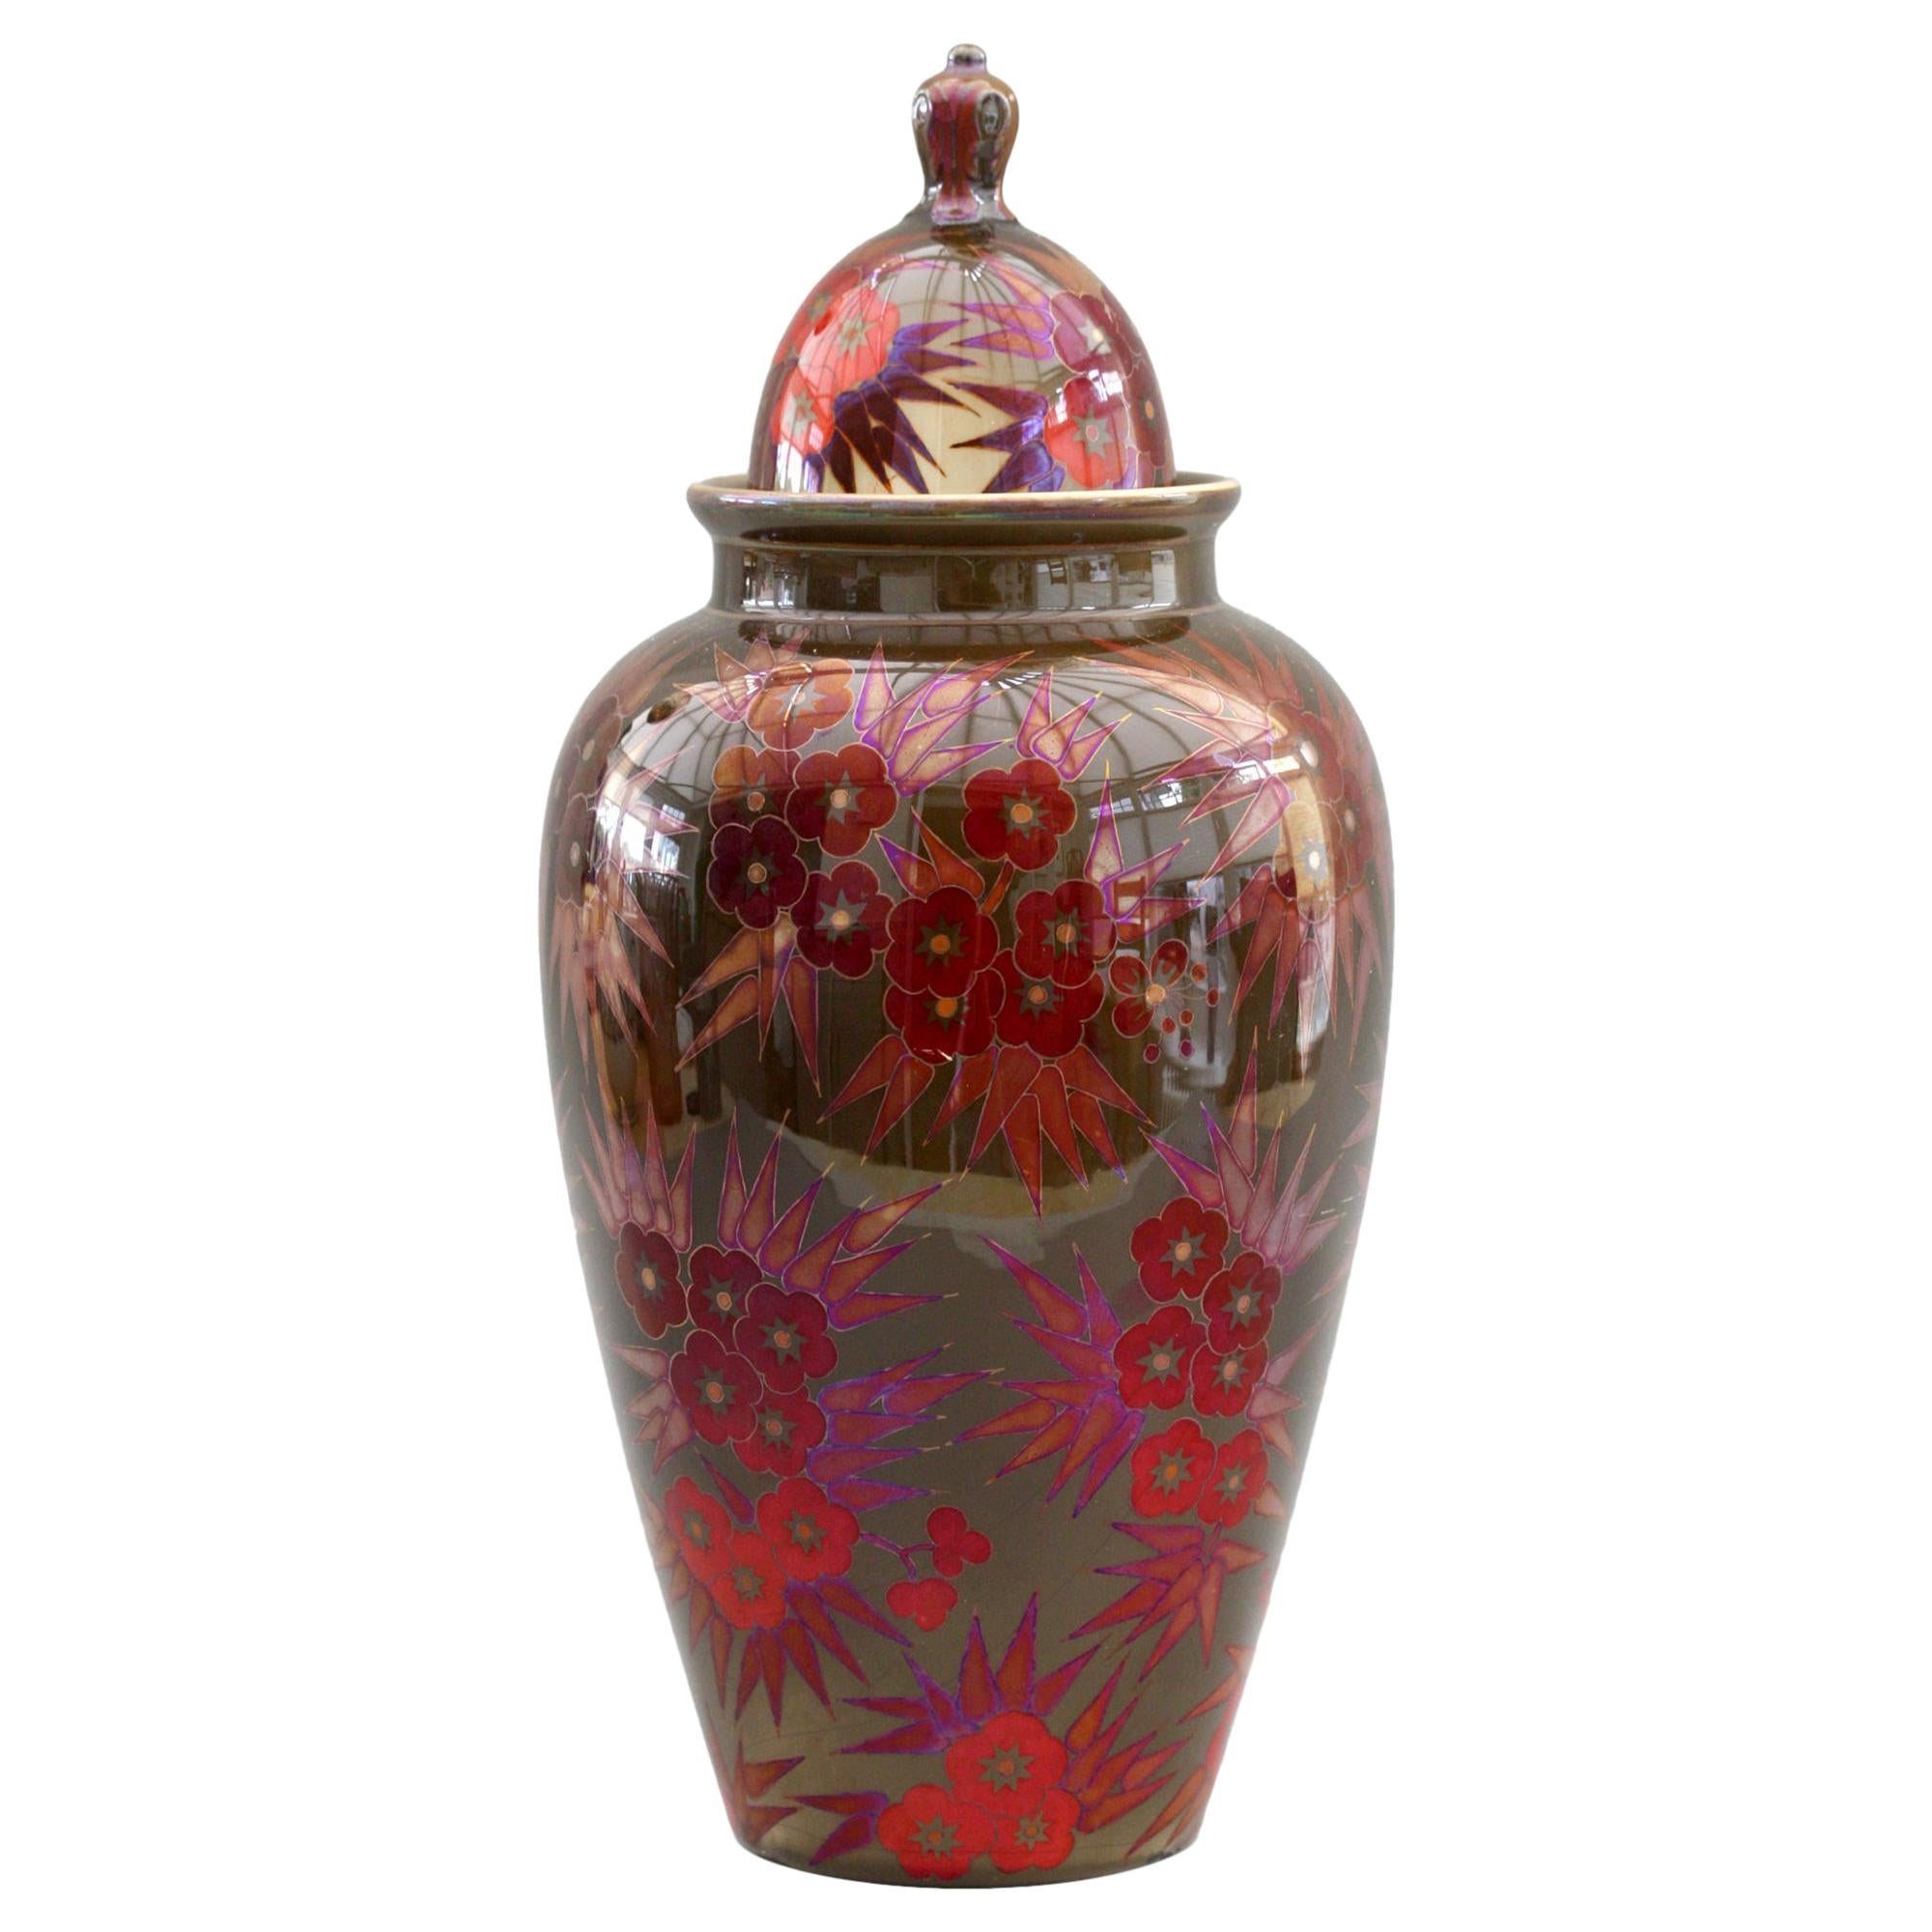 Zsolnay Pecs Art Deco Eosin Lustre Glazed Floral Decorated Lidded Vase